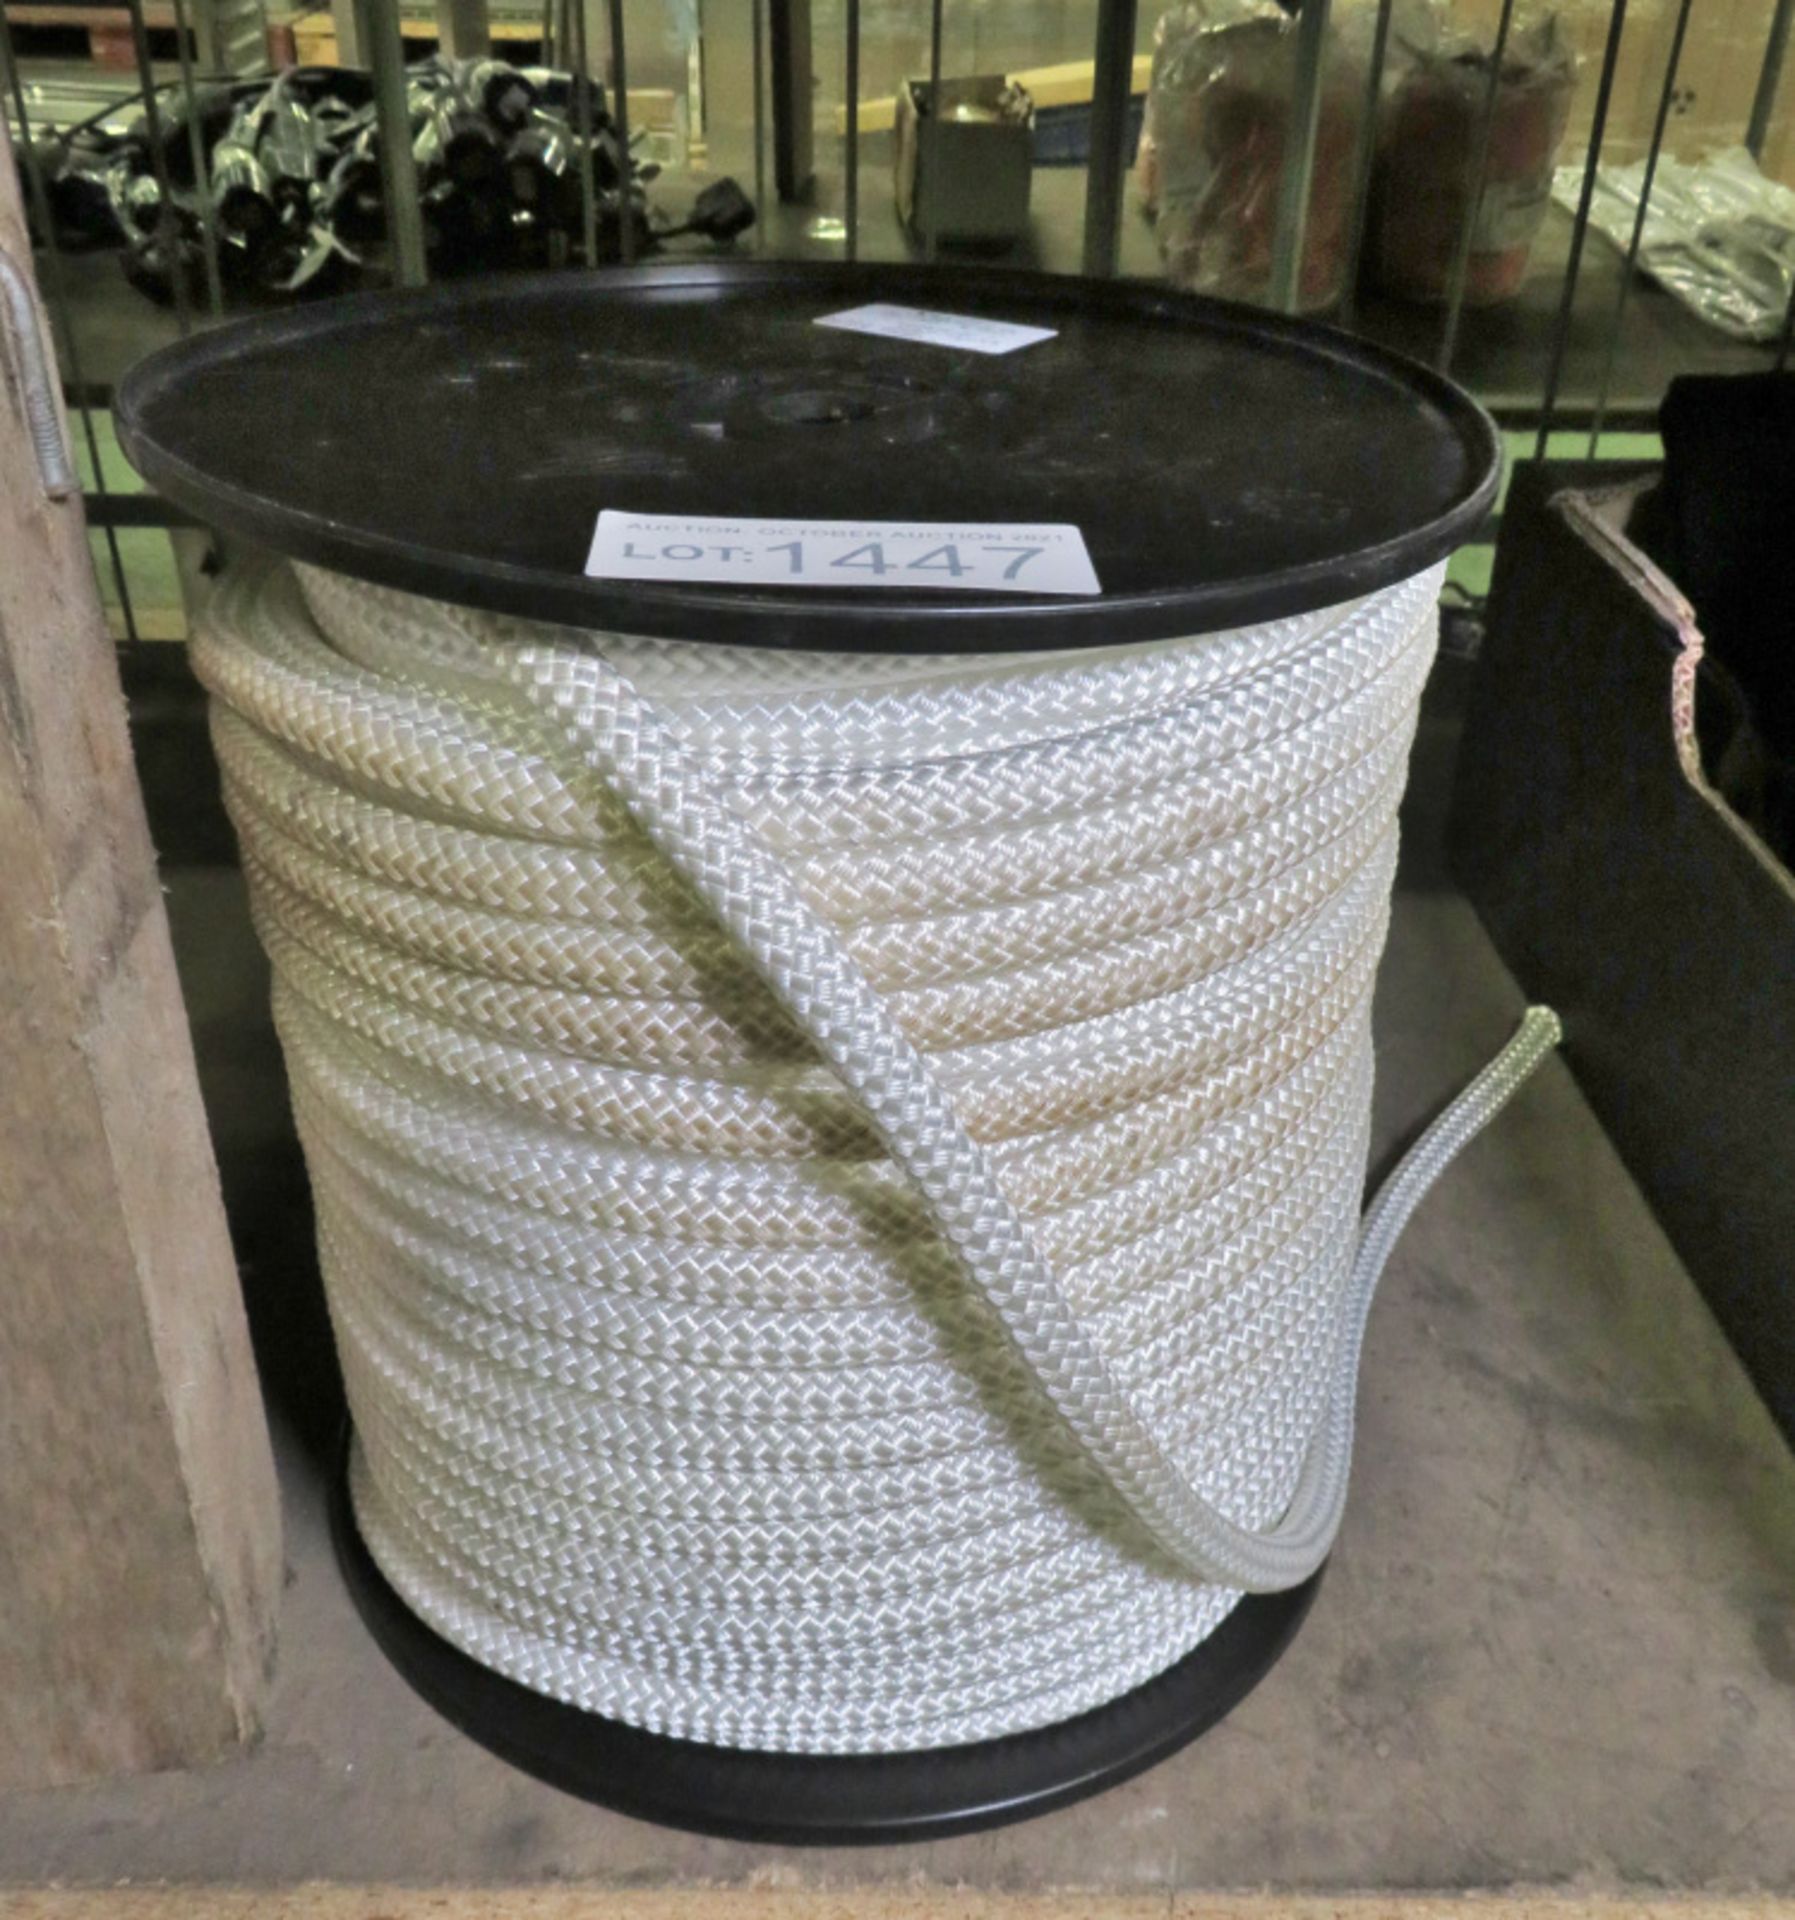 100M Drum of 13mm Halygard Rope